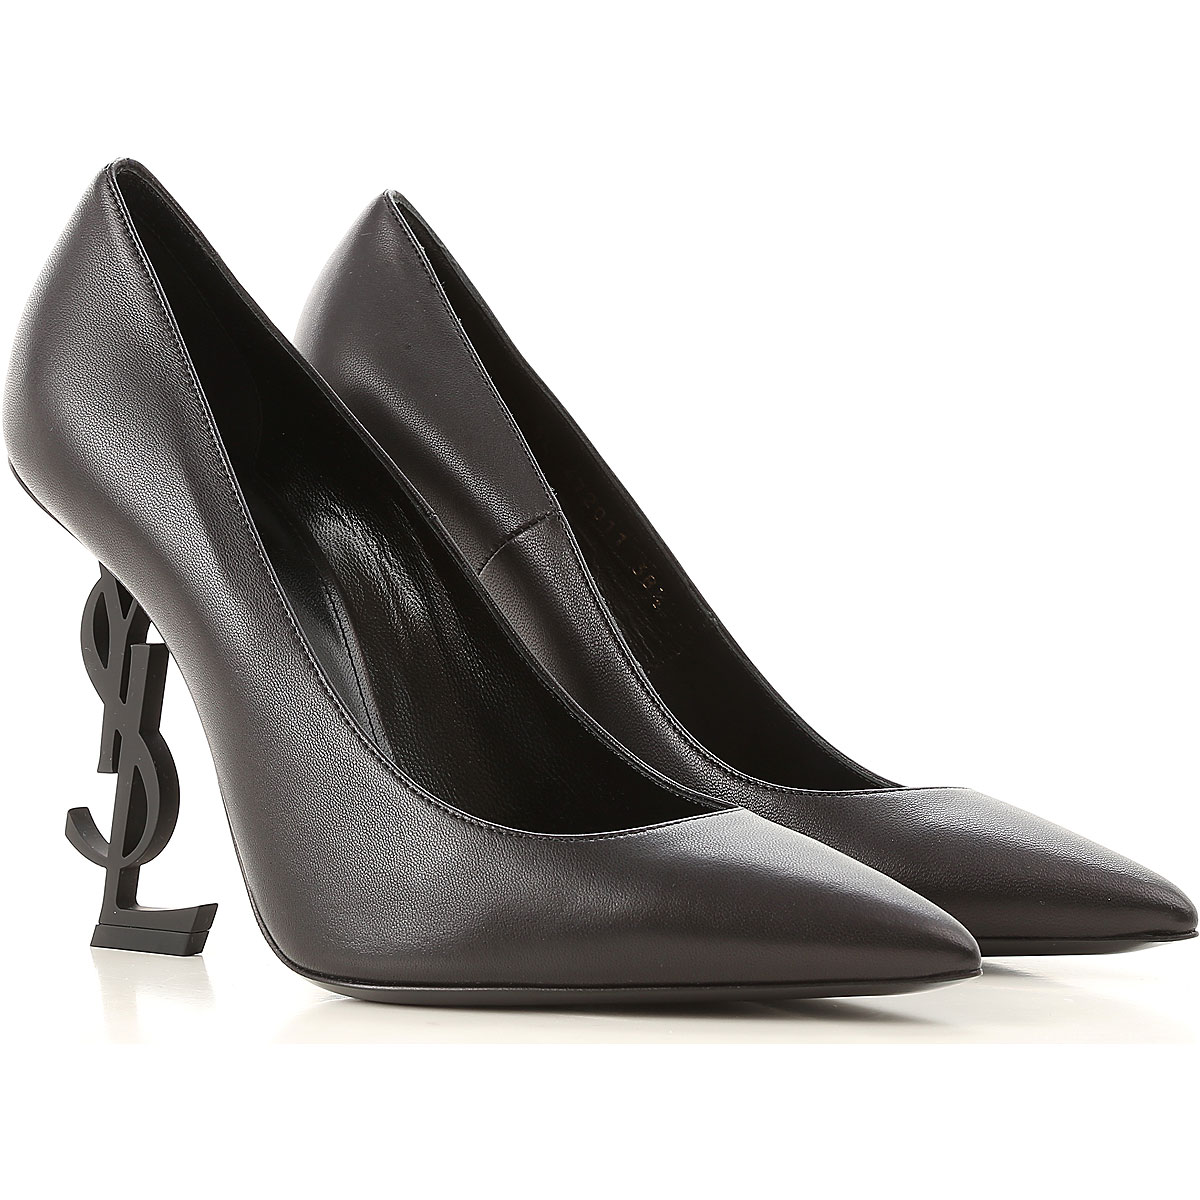 Womens Shoes Yves Saint Laurent, Style code: 472011-0n0uu-1000